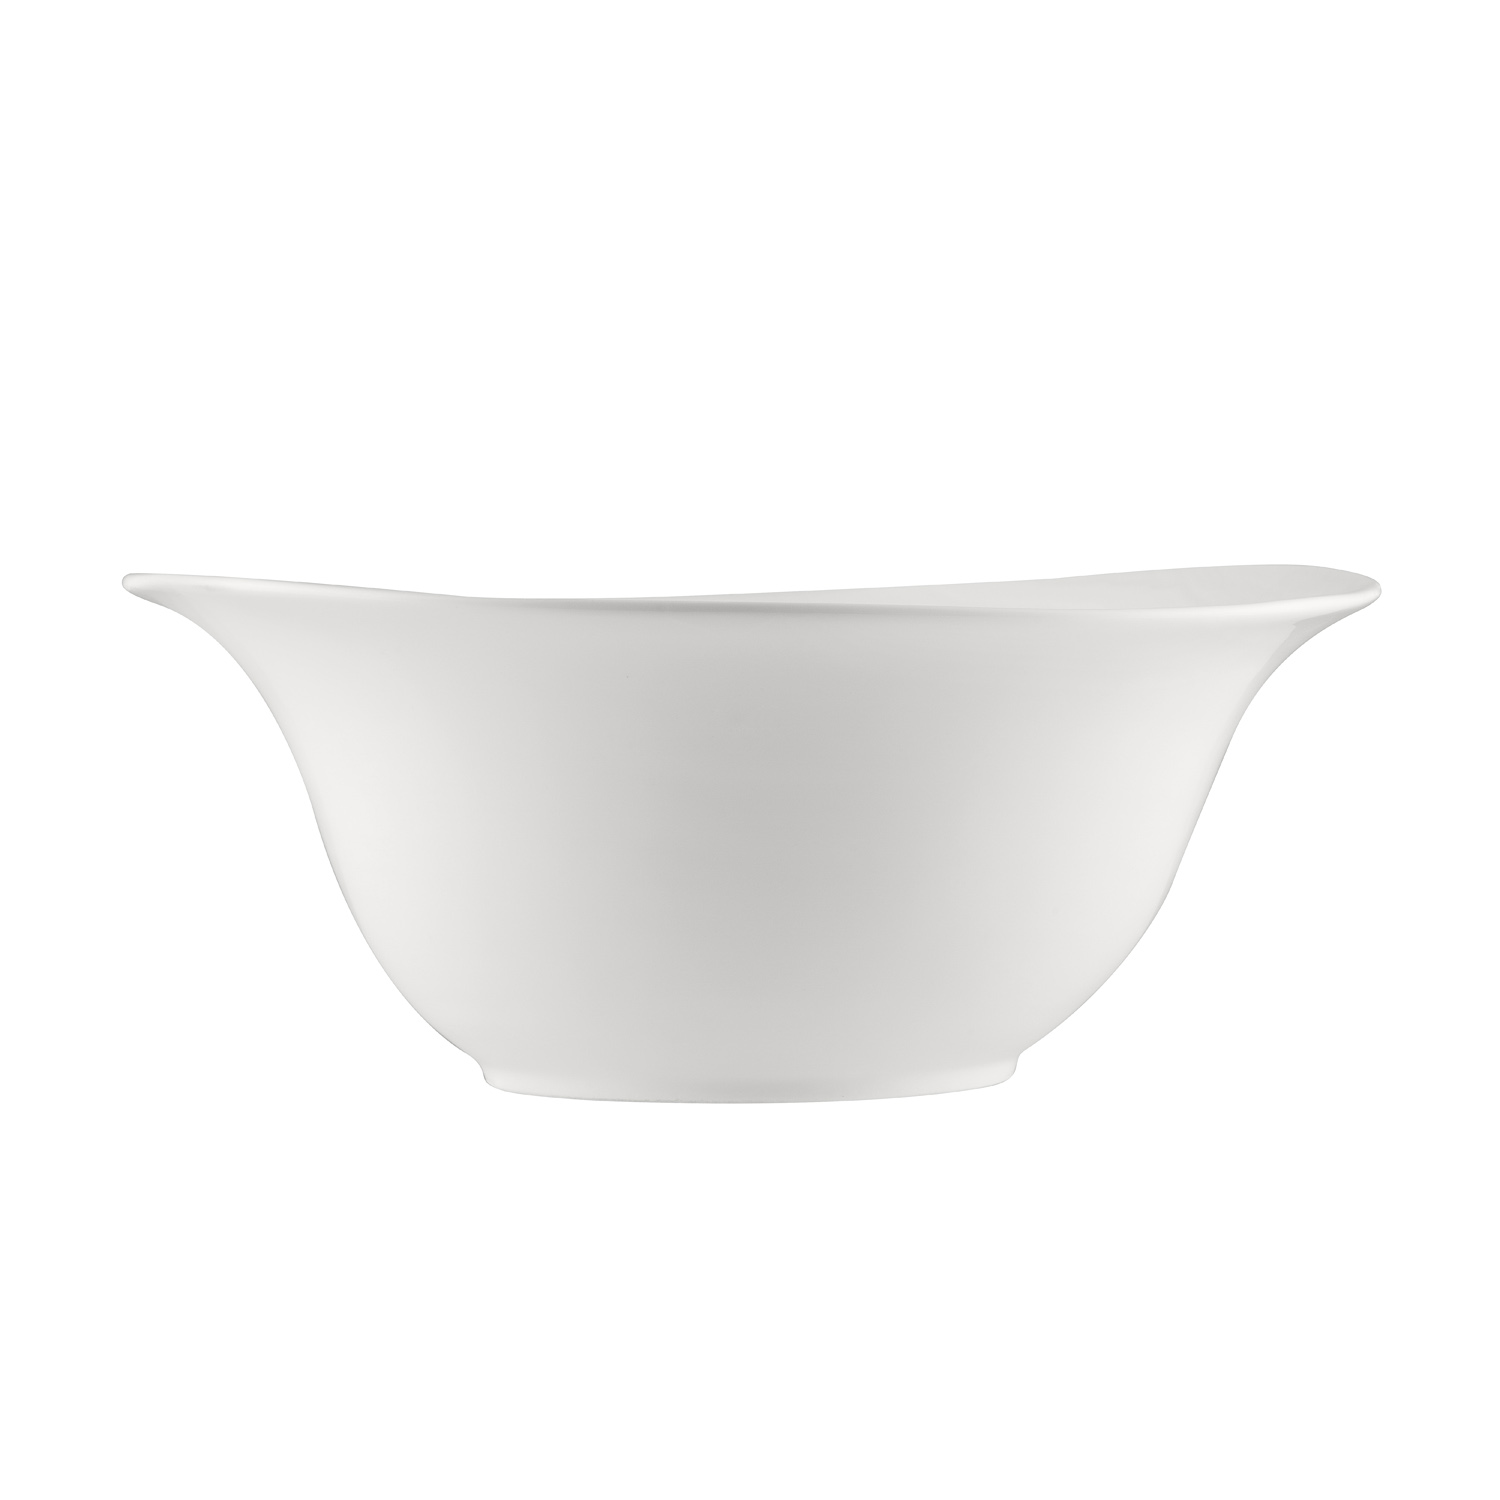 CAC China BHM-MB12 Bahamas Bone White Porcelain Salad/Pasta Bowl 89.5 oz., 12" - 1 dozen